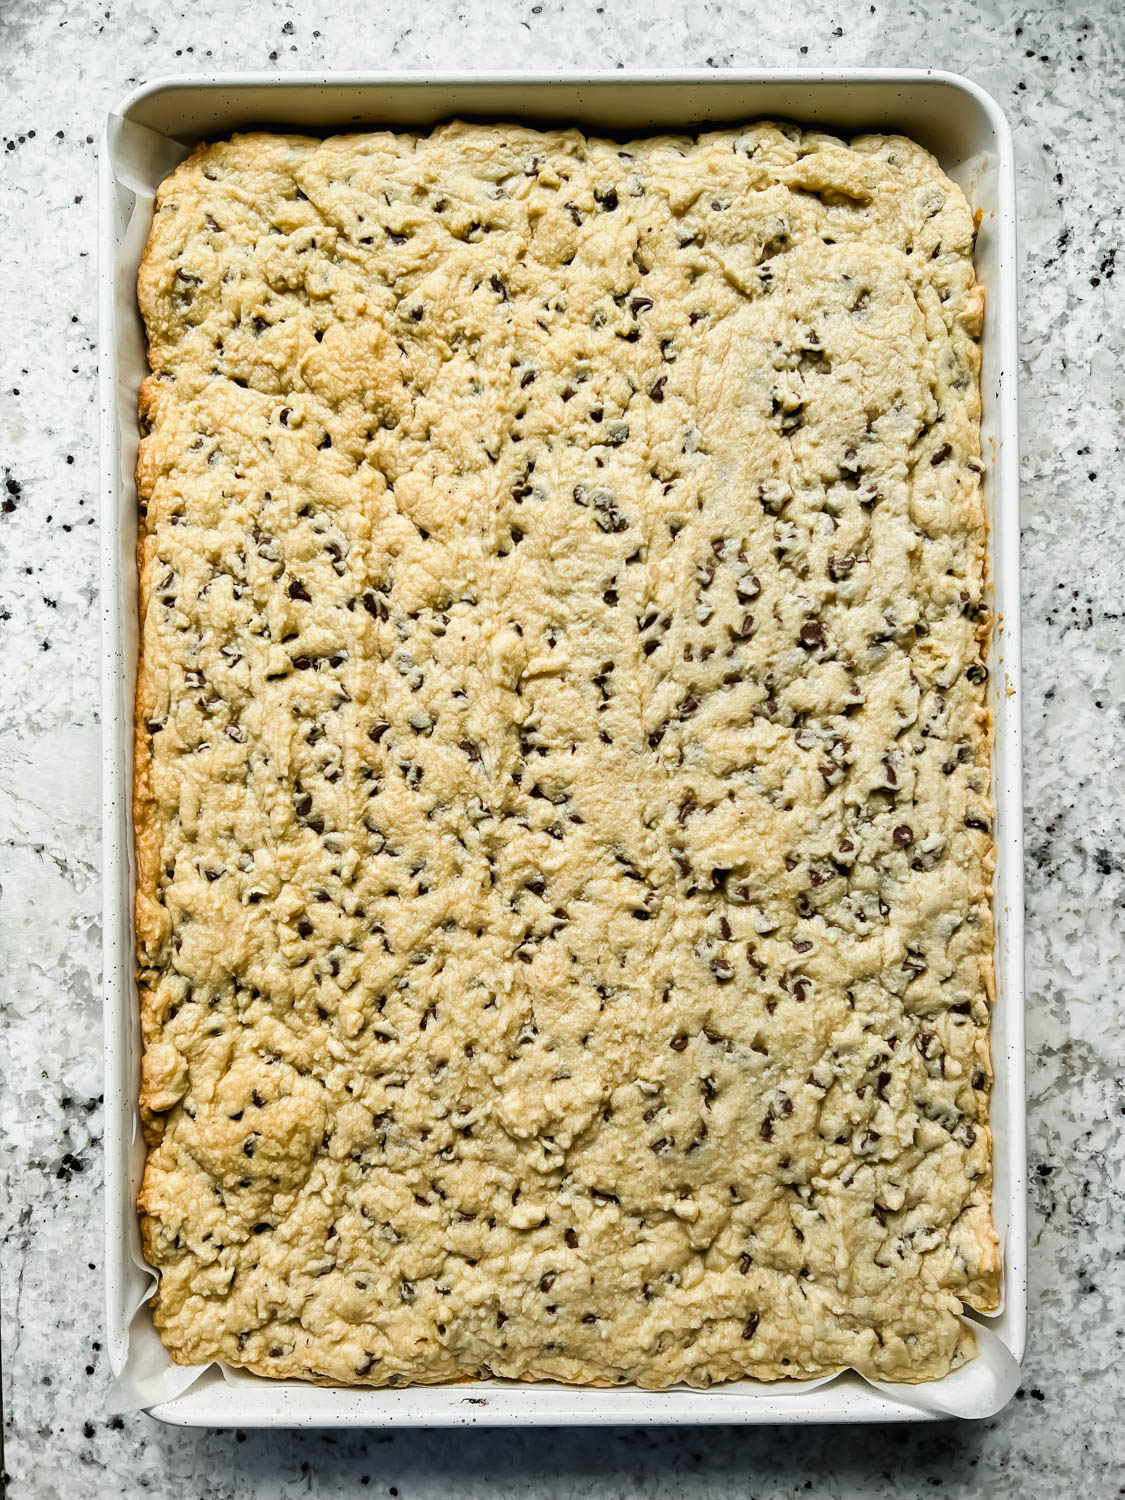 baked chocolate chip cookie cake in rectangular baking sheet on granite counter top.